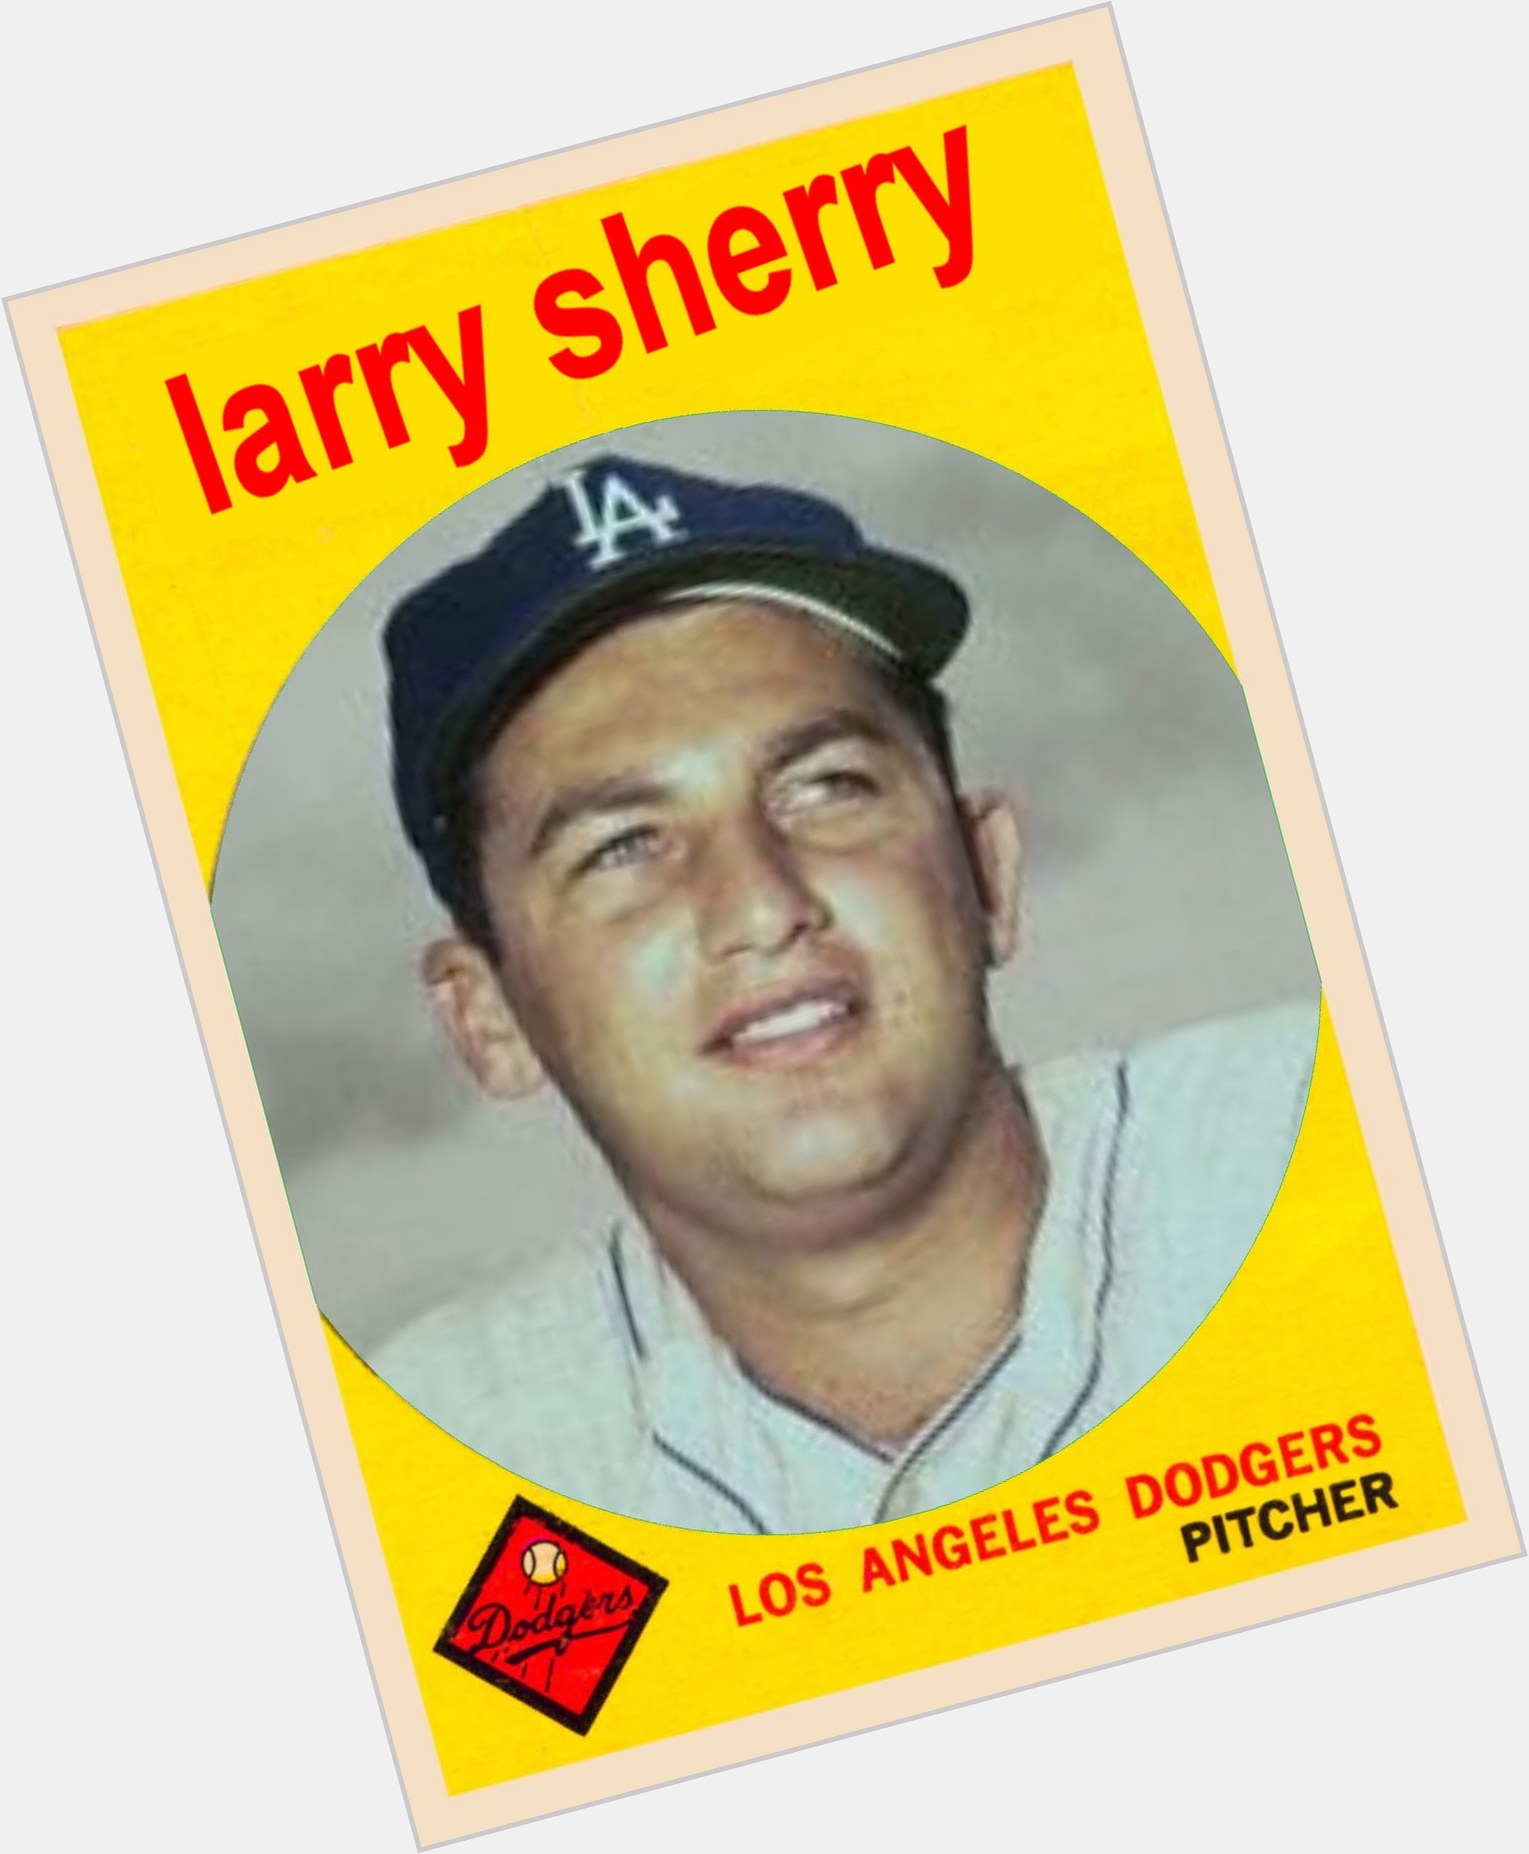 Larry Sherry  